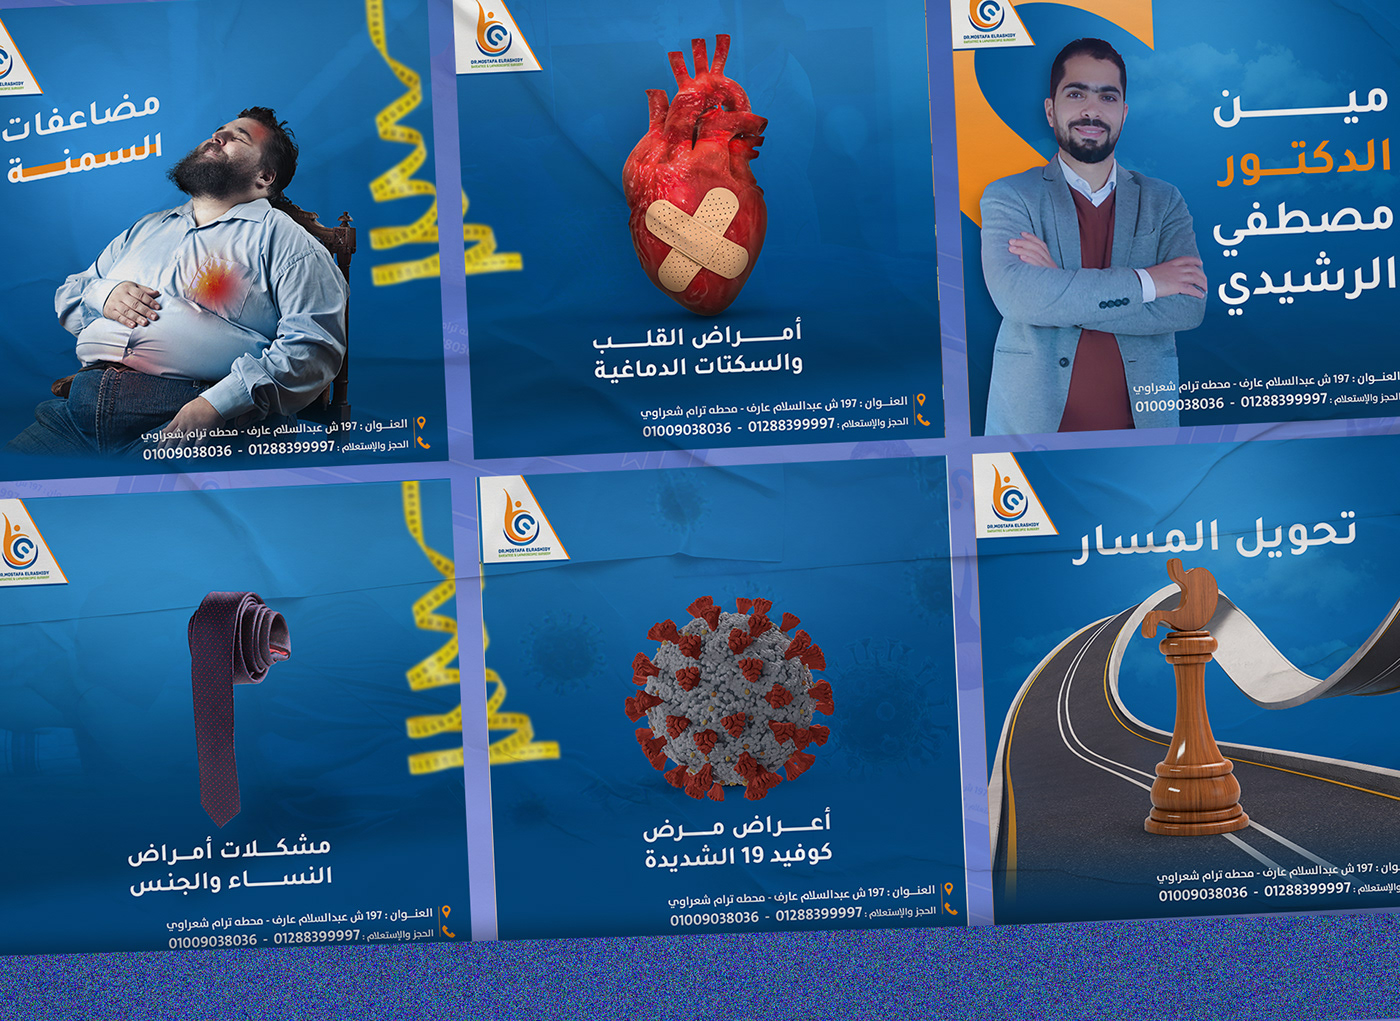 Advertising  clinic doctor KSA KSA projects medical medicine Obesity poster Social media post